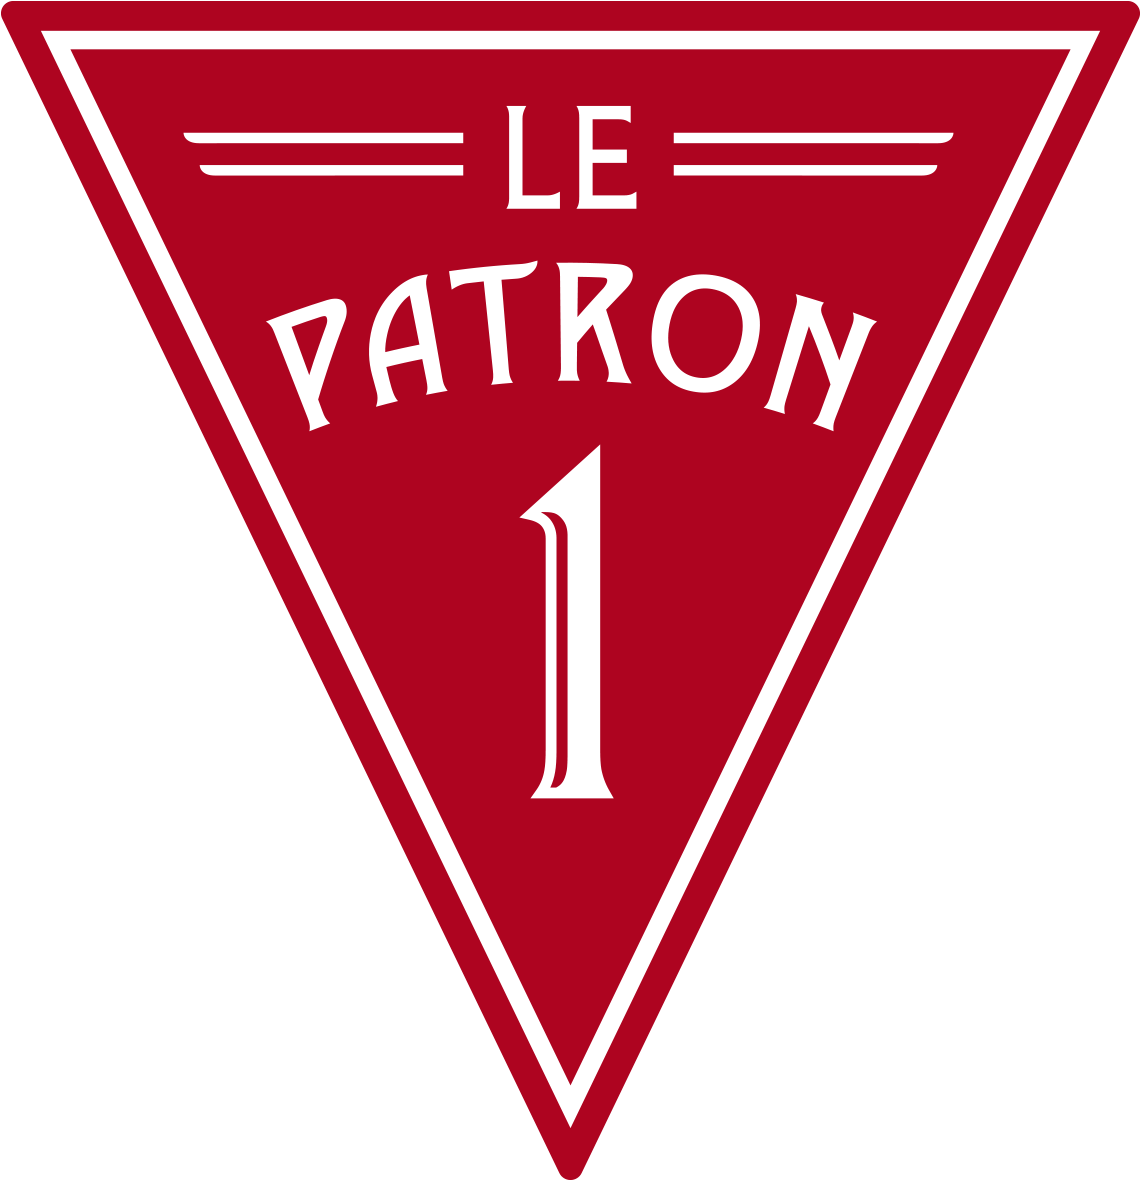 Le Patron Number1 Logo PNG